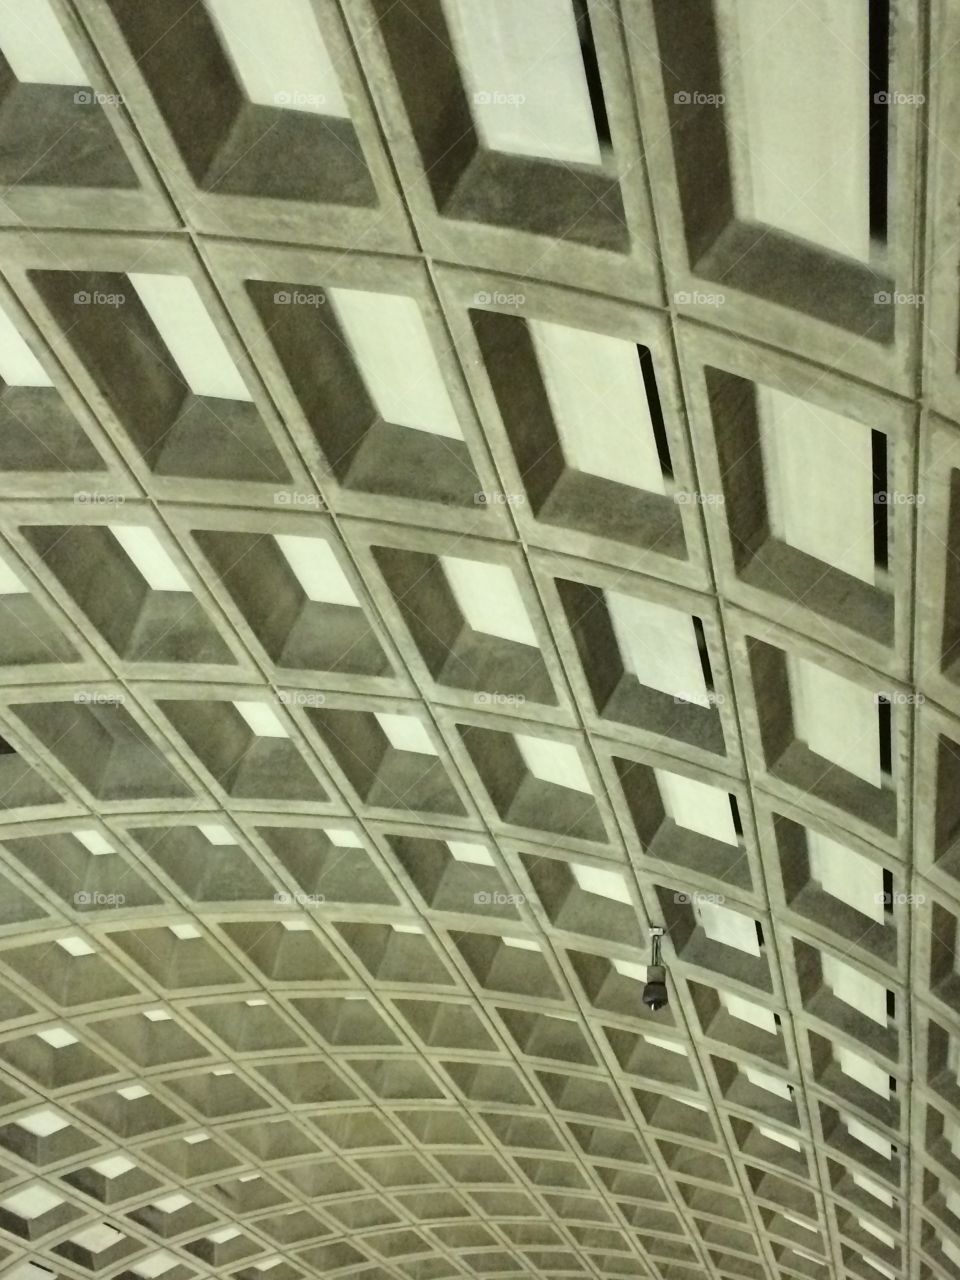 DC transit tunnel 